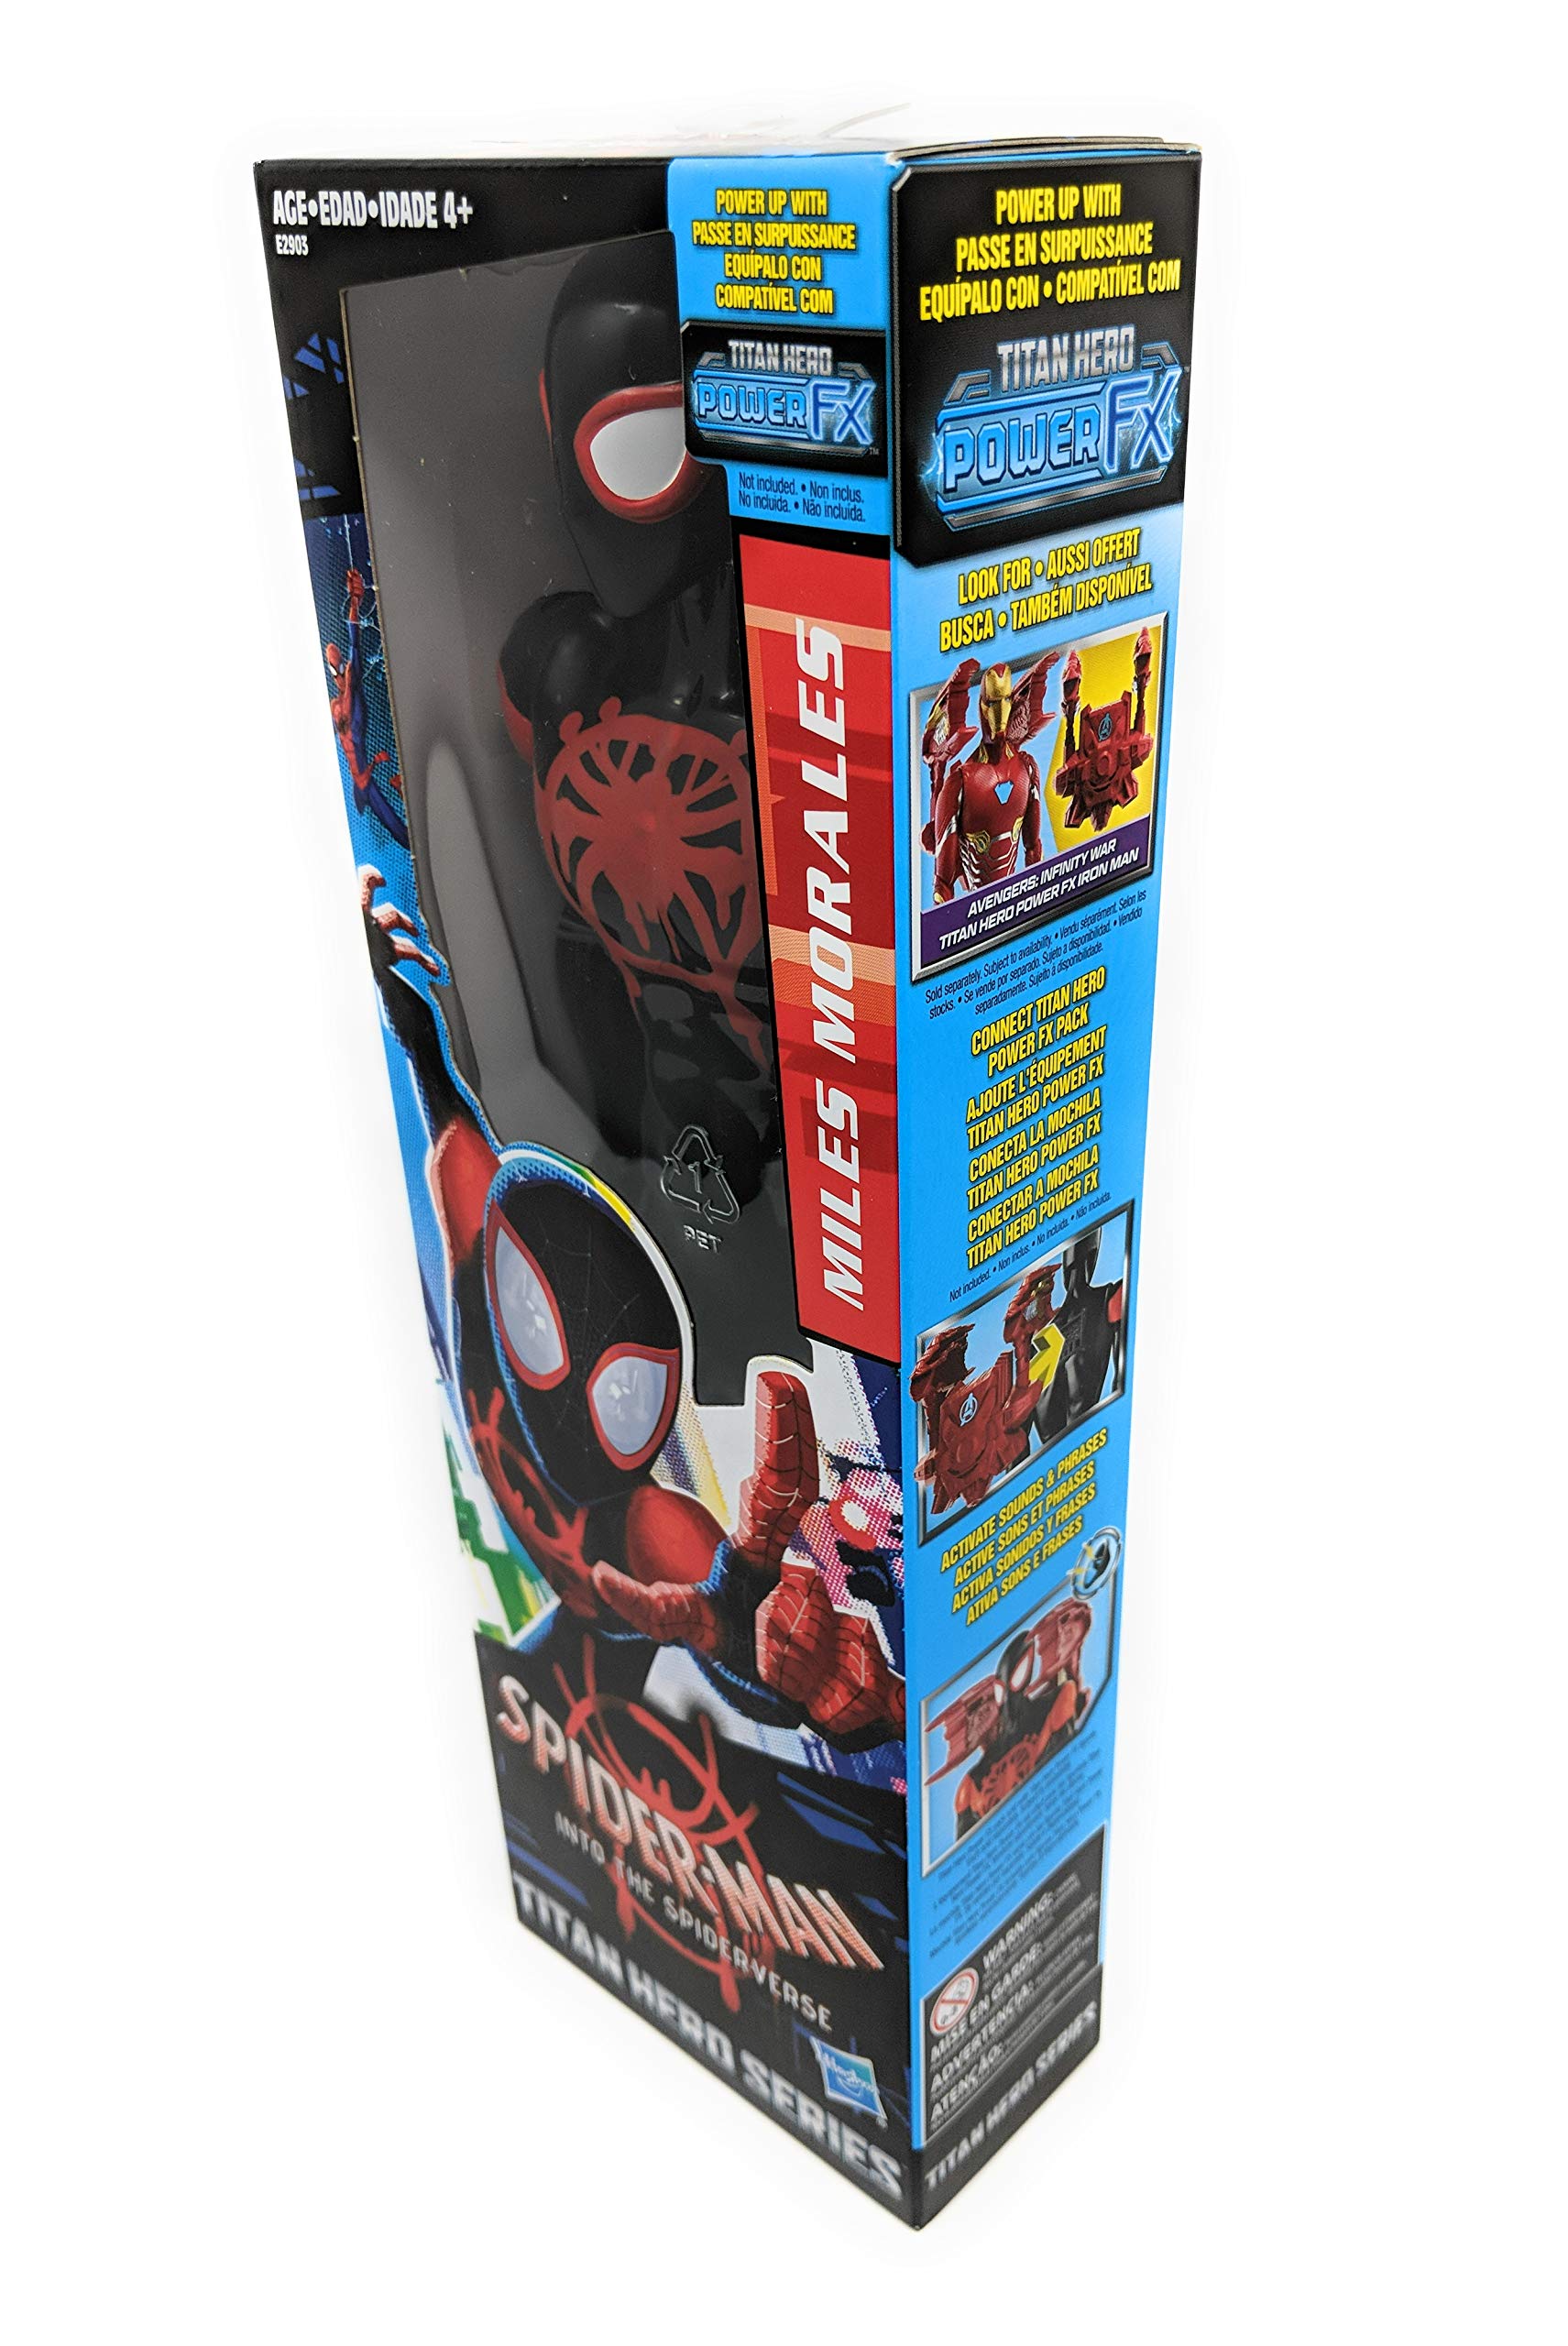 Spider-Man: Into The Spider-Verse Titan Hero Series Mile Morales with Titan Hero Power Fx Port Action Figures E2903